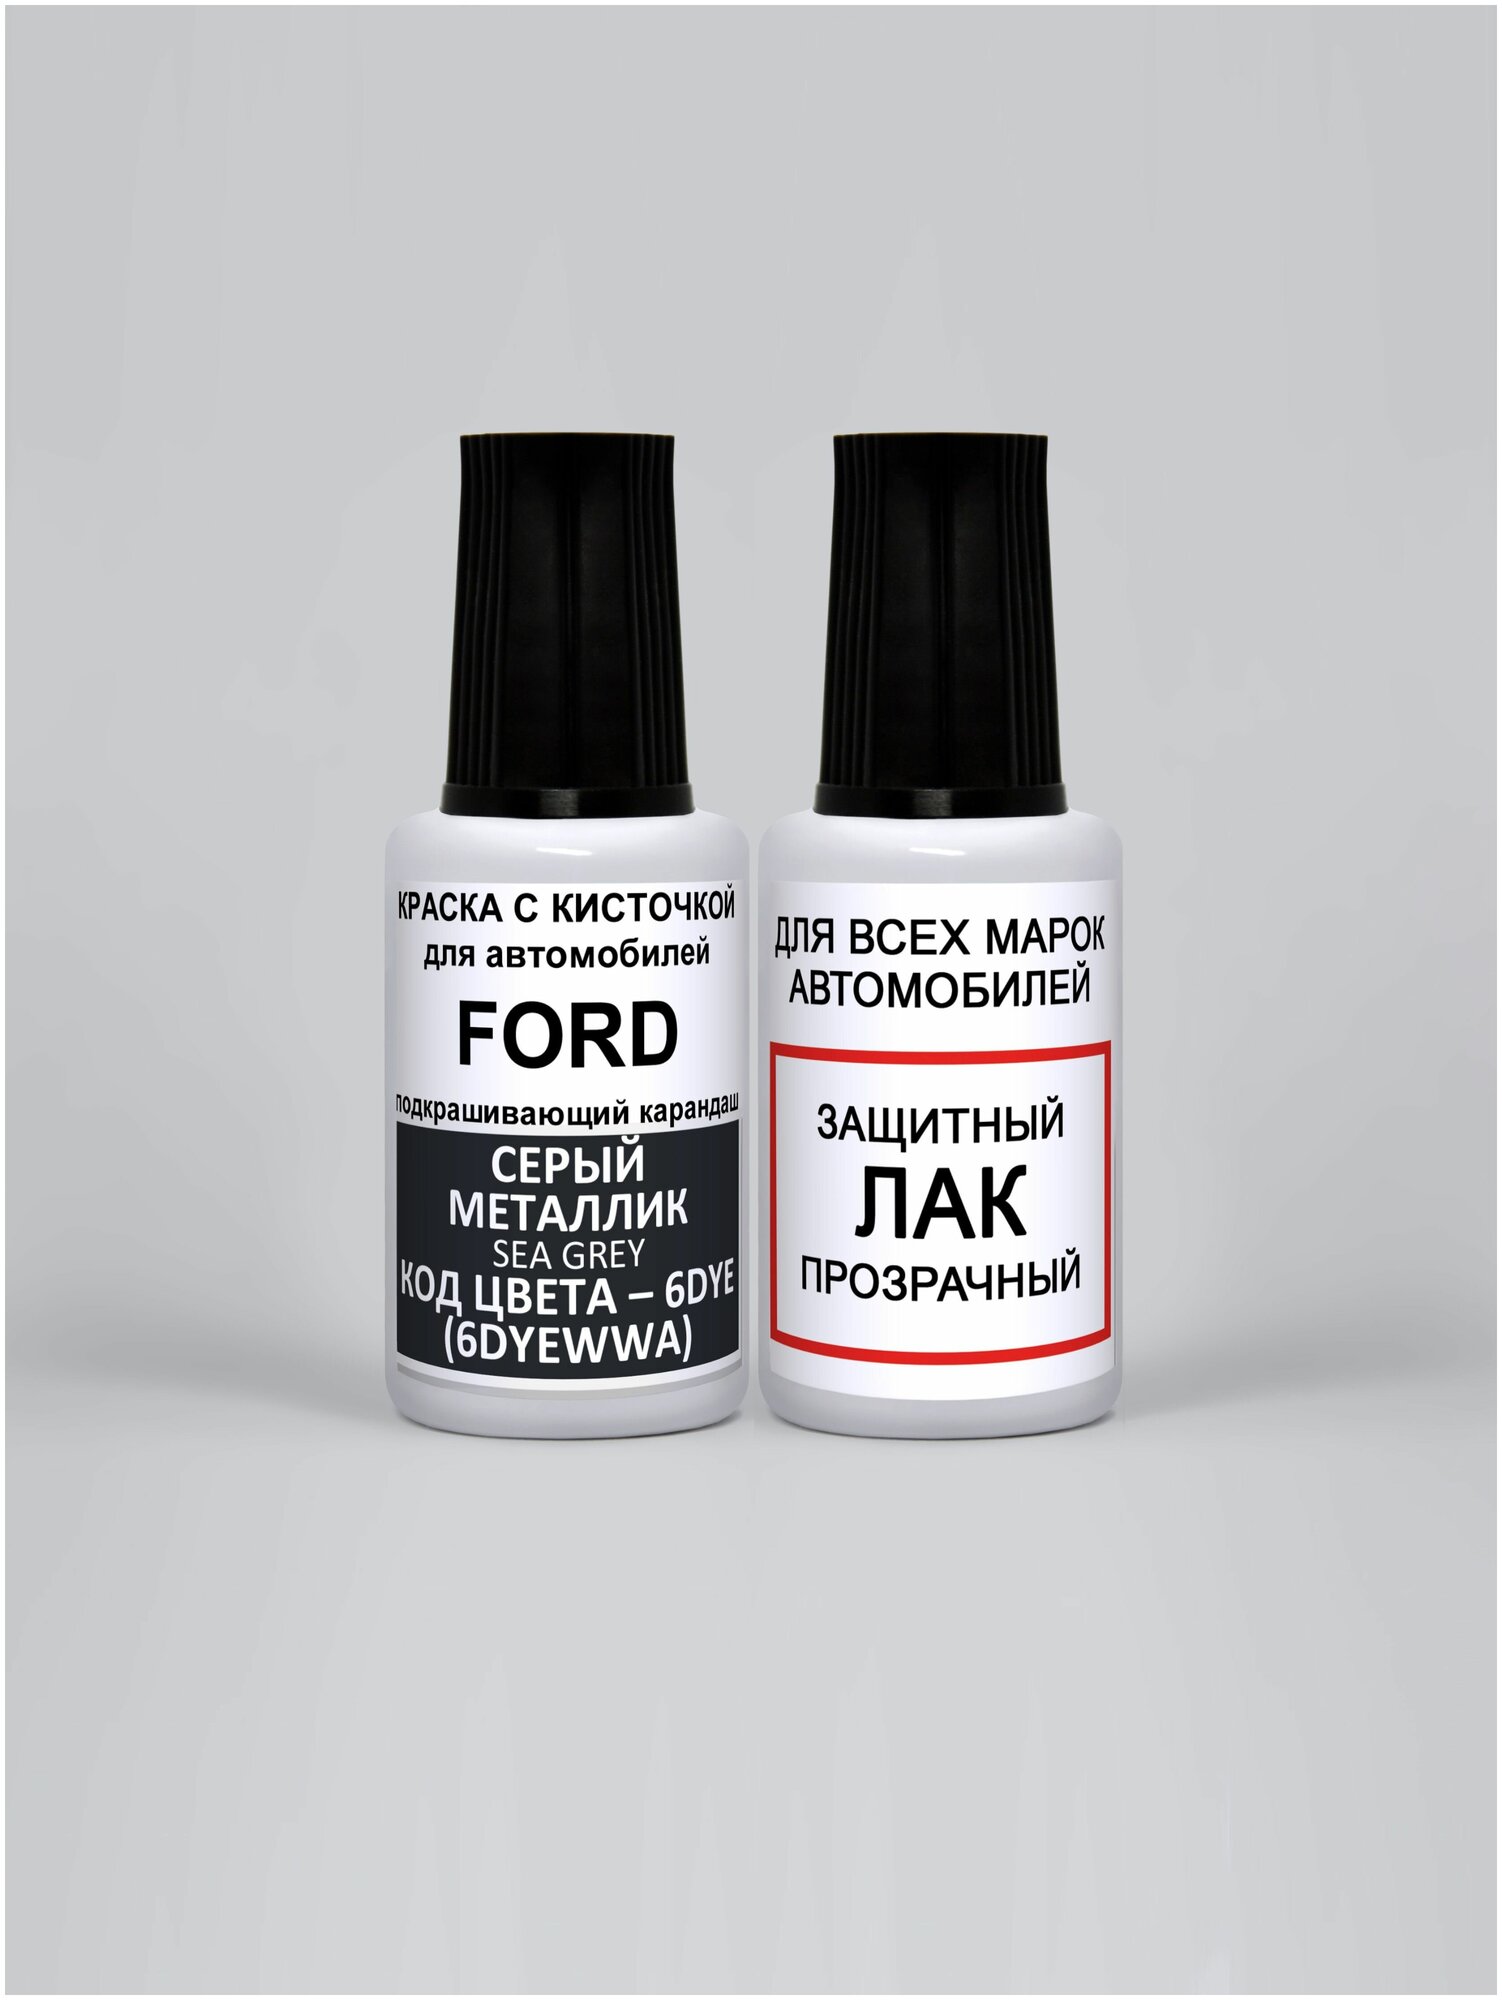 Эмаль для подкраски с кисточкой 6DYE (6DYEWWA) для Ford Серый металлик, Sea Grey, краска+лак